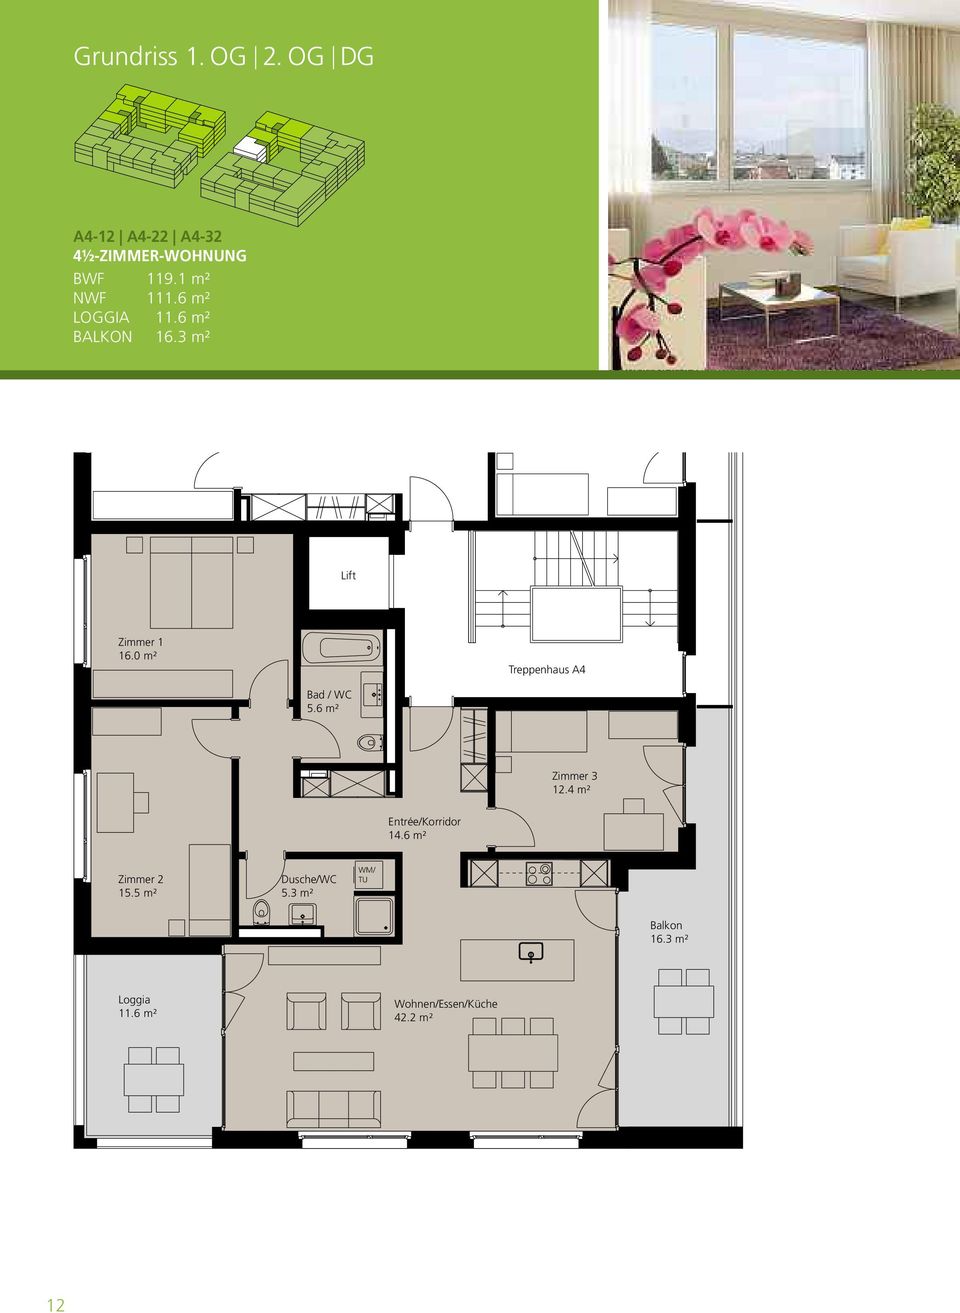 0 m² Treppenhaus A4 Bad /WC 5.6 m² Zimmer 3 12.4 m² Entrée/Korridor 14.